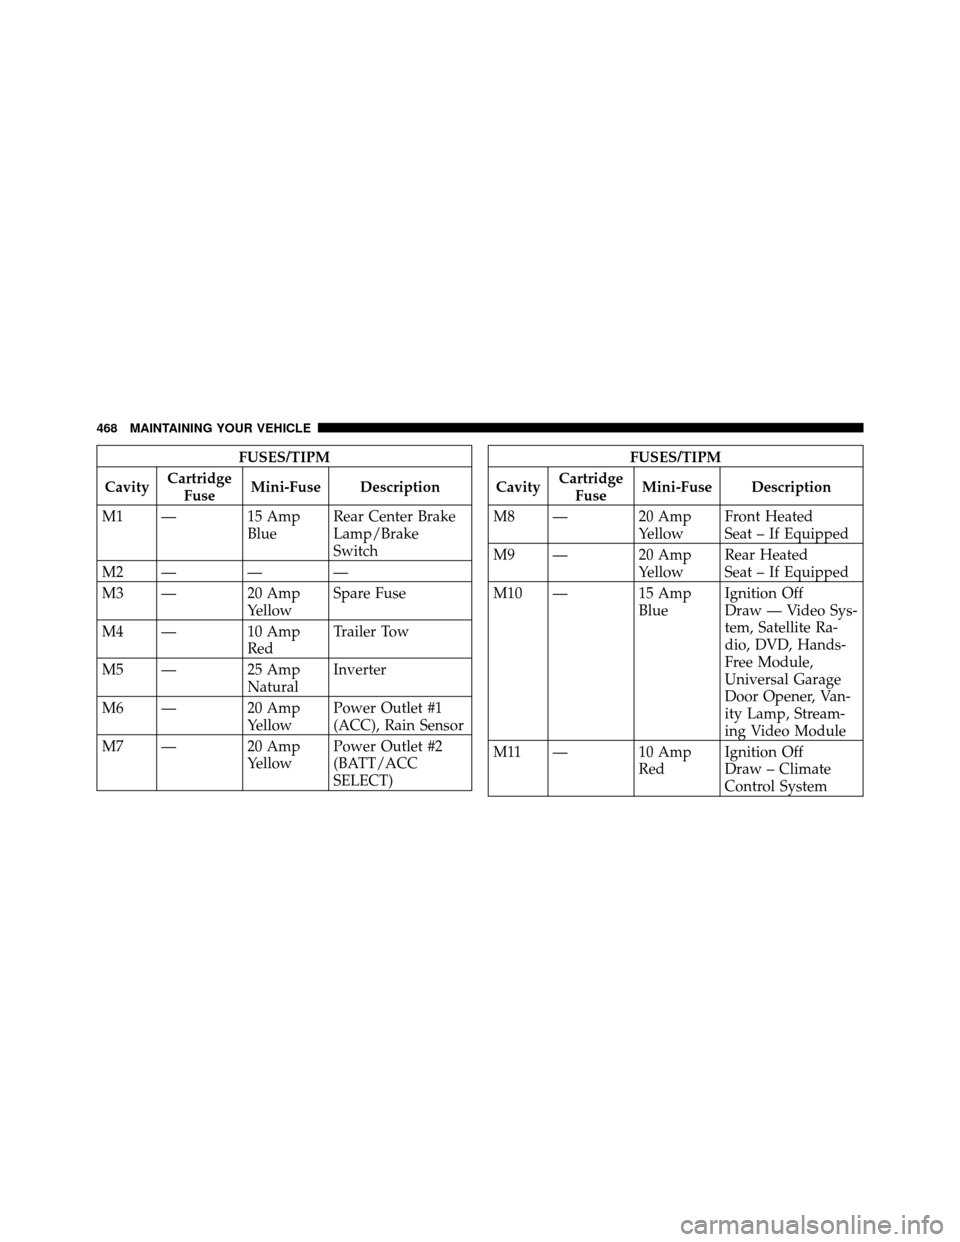 DODGE GRAND CARAVAN 2010 5.G Owners Manual 
FUSES/TIPM
Cavity Cartridge
Fuse Mini-Fuse Description
M1 — 15 Amp BlueRear Center Brake
Lamp/Brake
Switch
M2———
M3 — 20 Amp YellowSpare Fuse
M4 — 10 Amp RedTrailer Tow
M5 — 25 Amp Natu